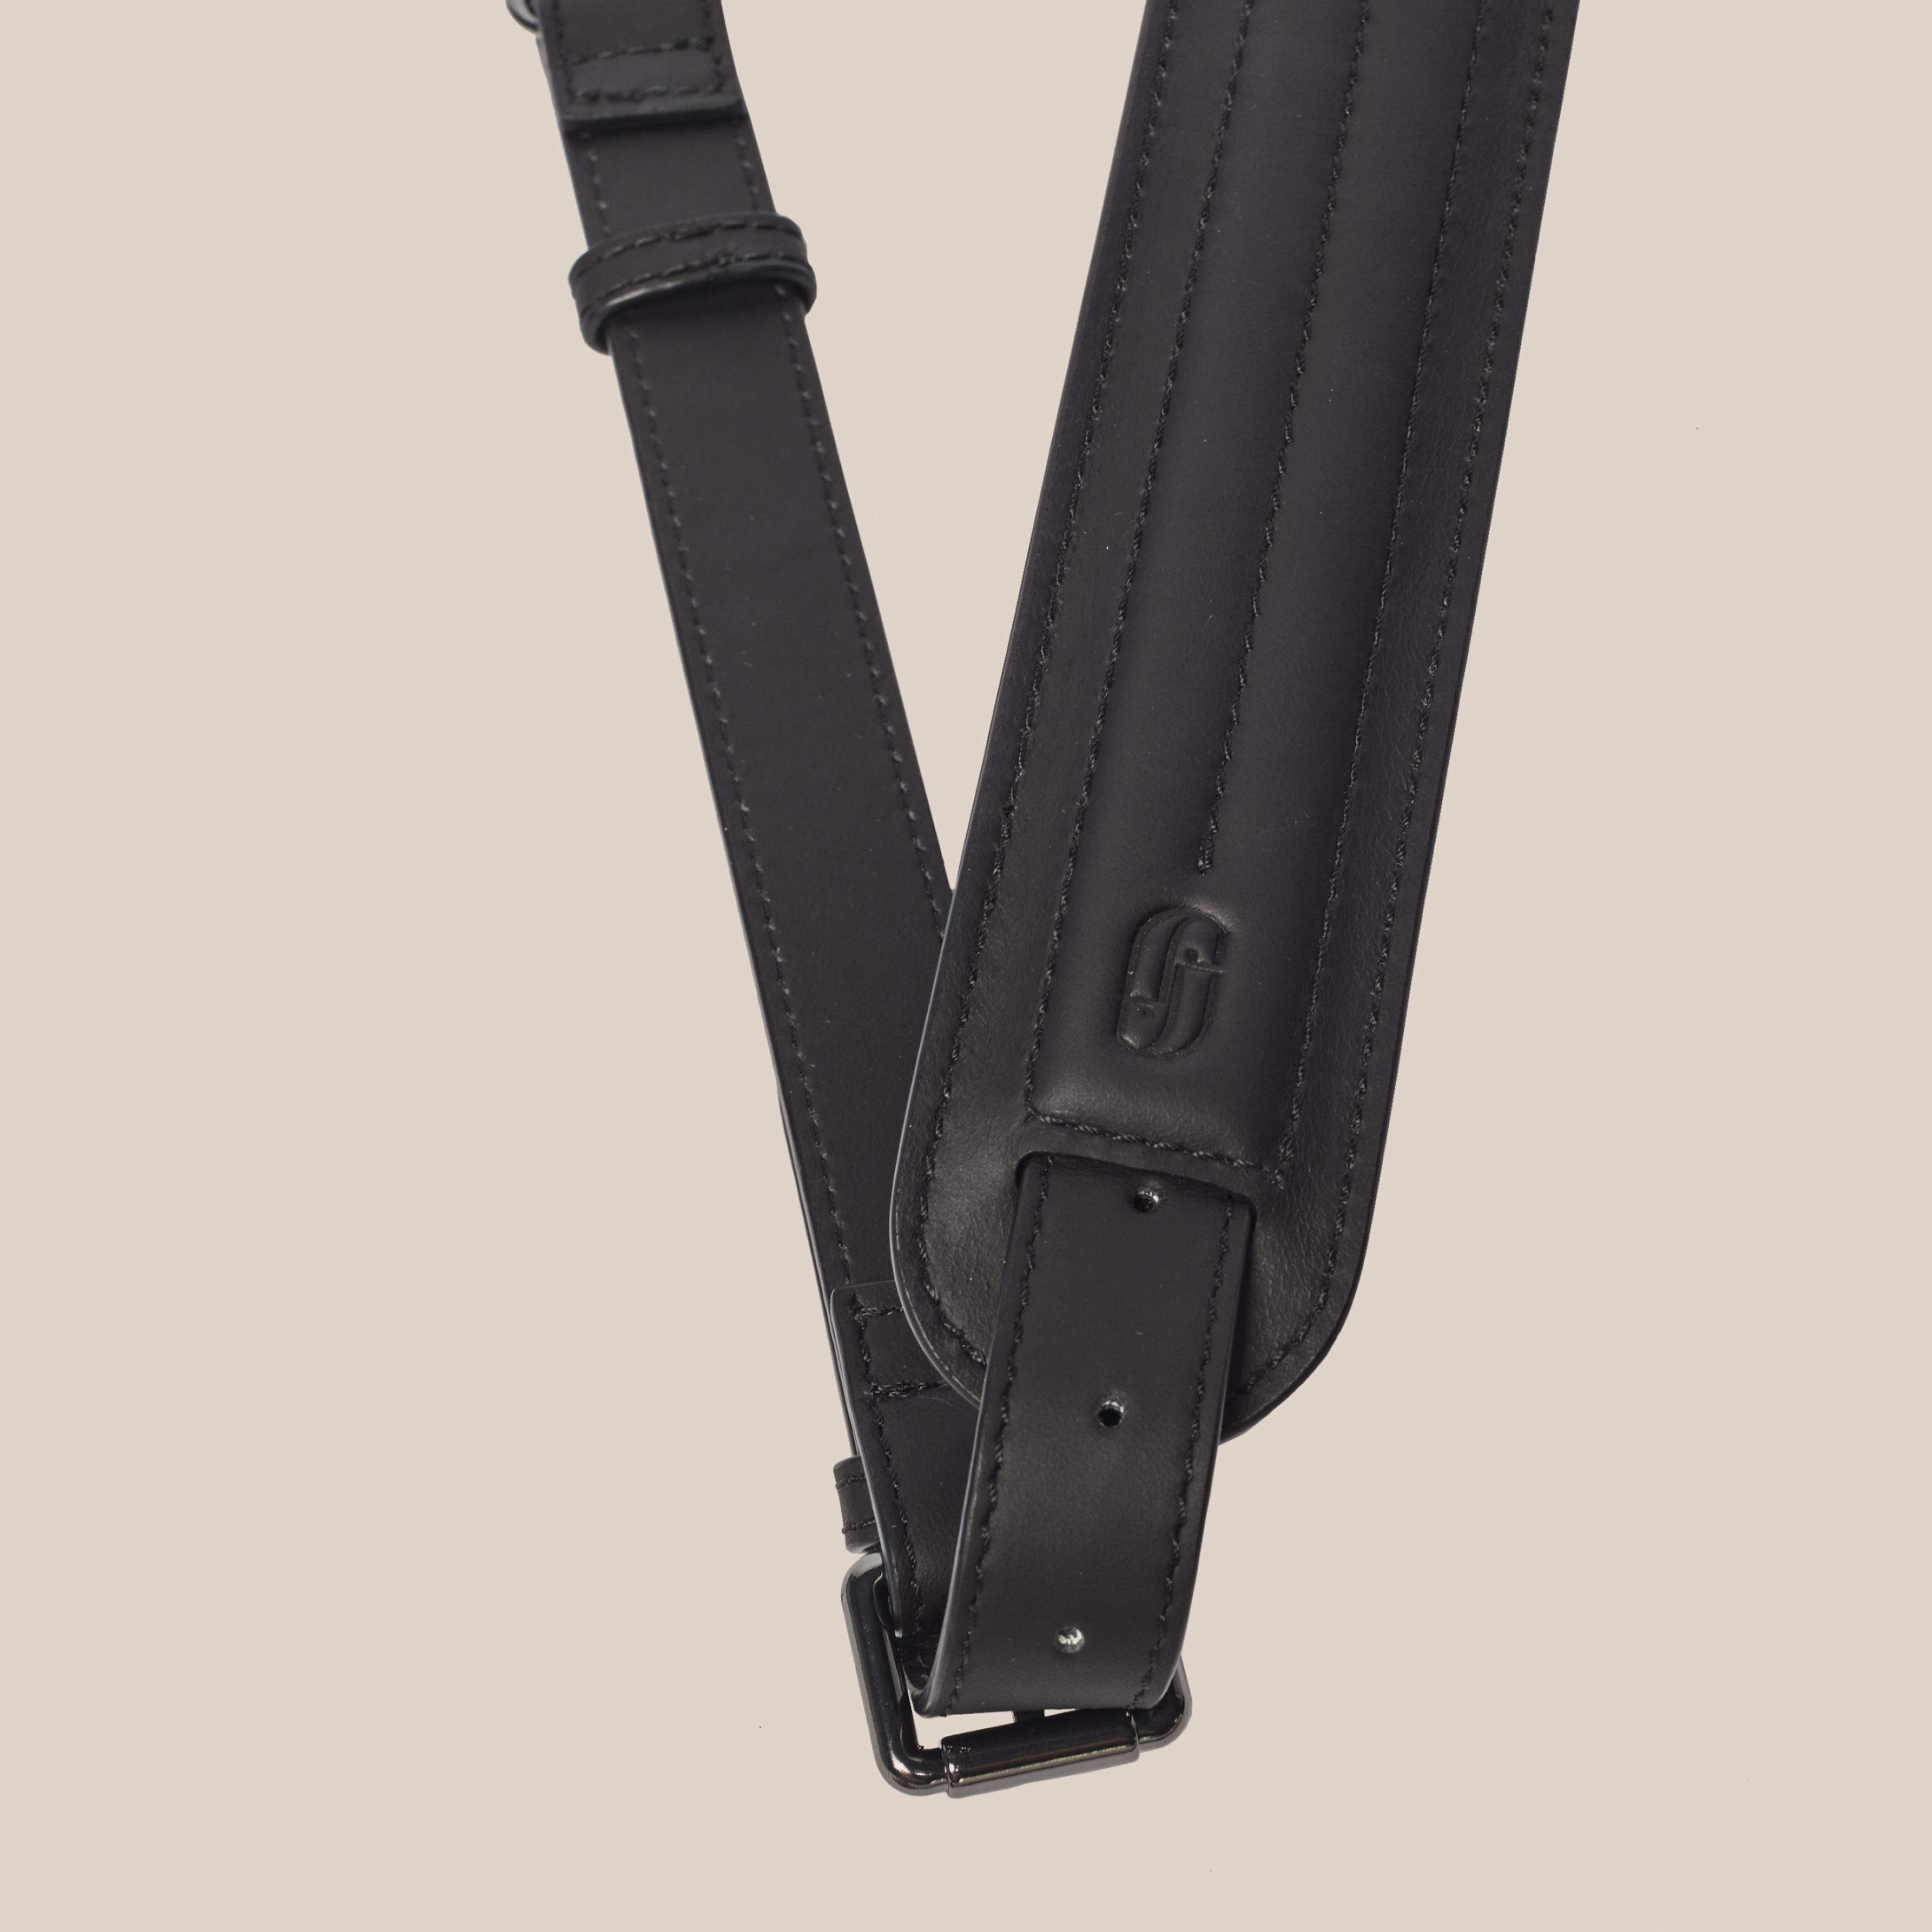 Anesi shoulder strap in black leather